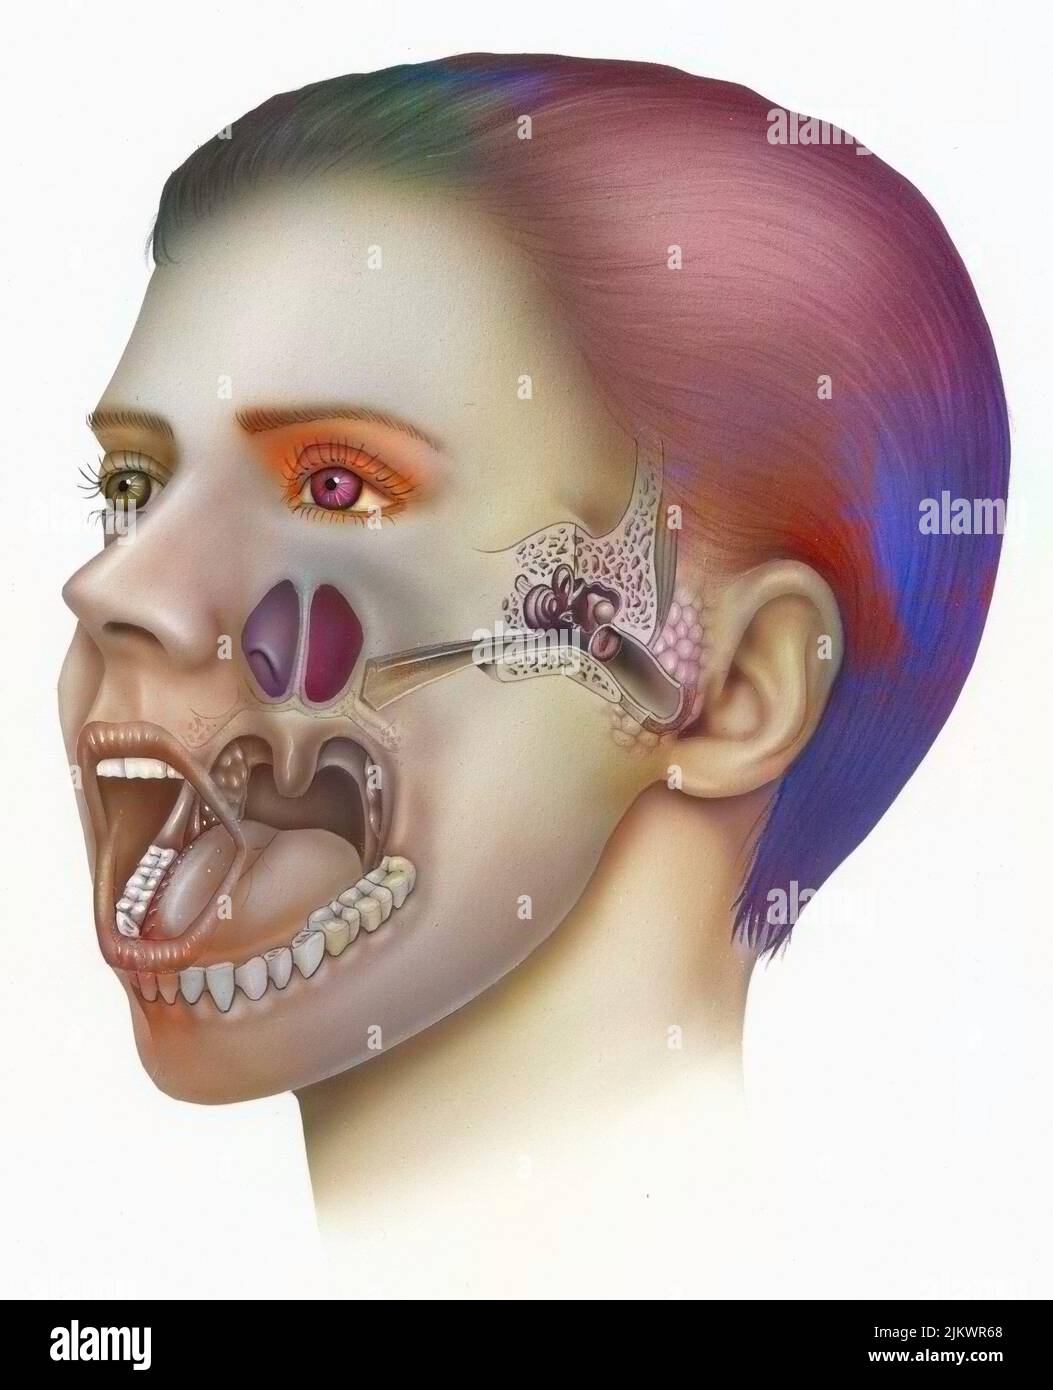 Otorhinopharynx with oral cavity, nasal cavity, pharynx, and ear. Stock Photo